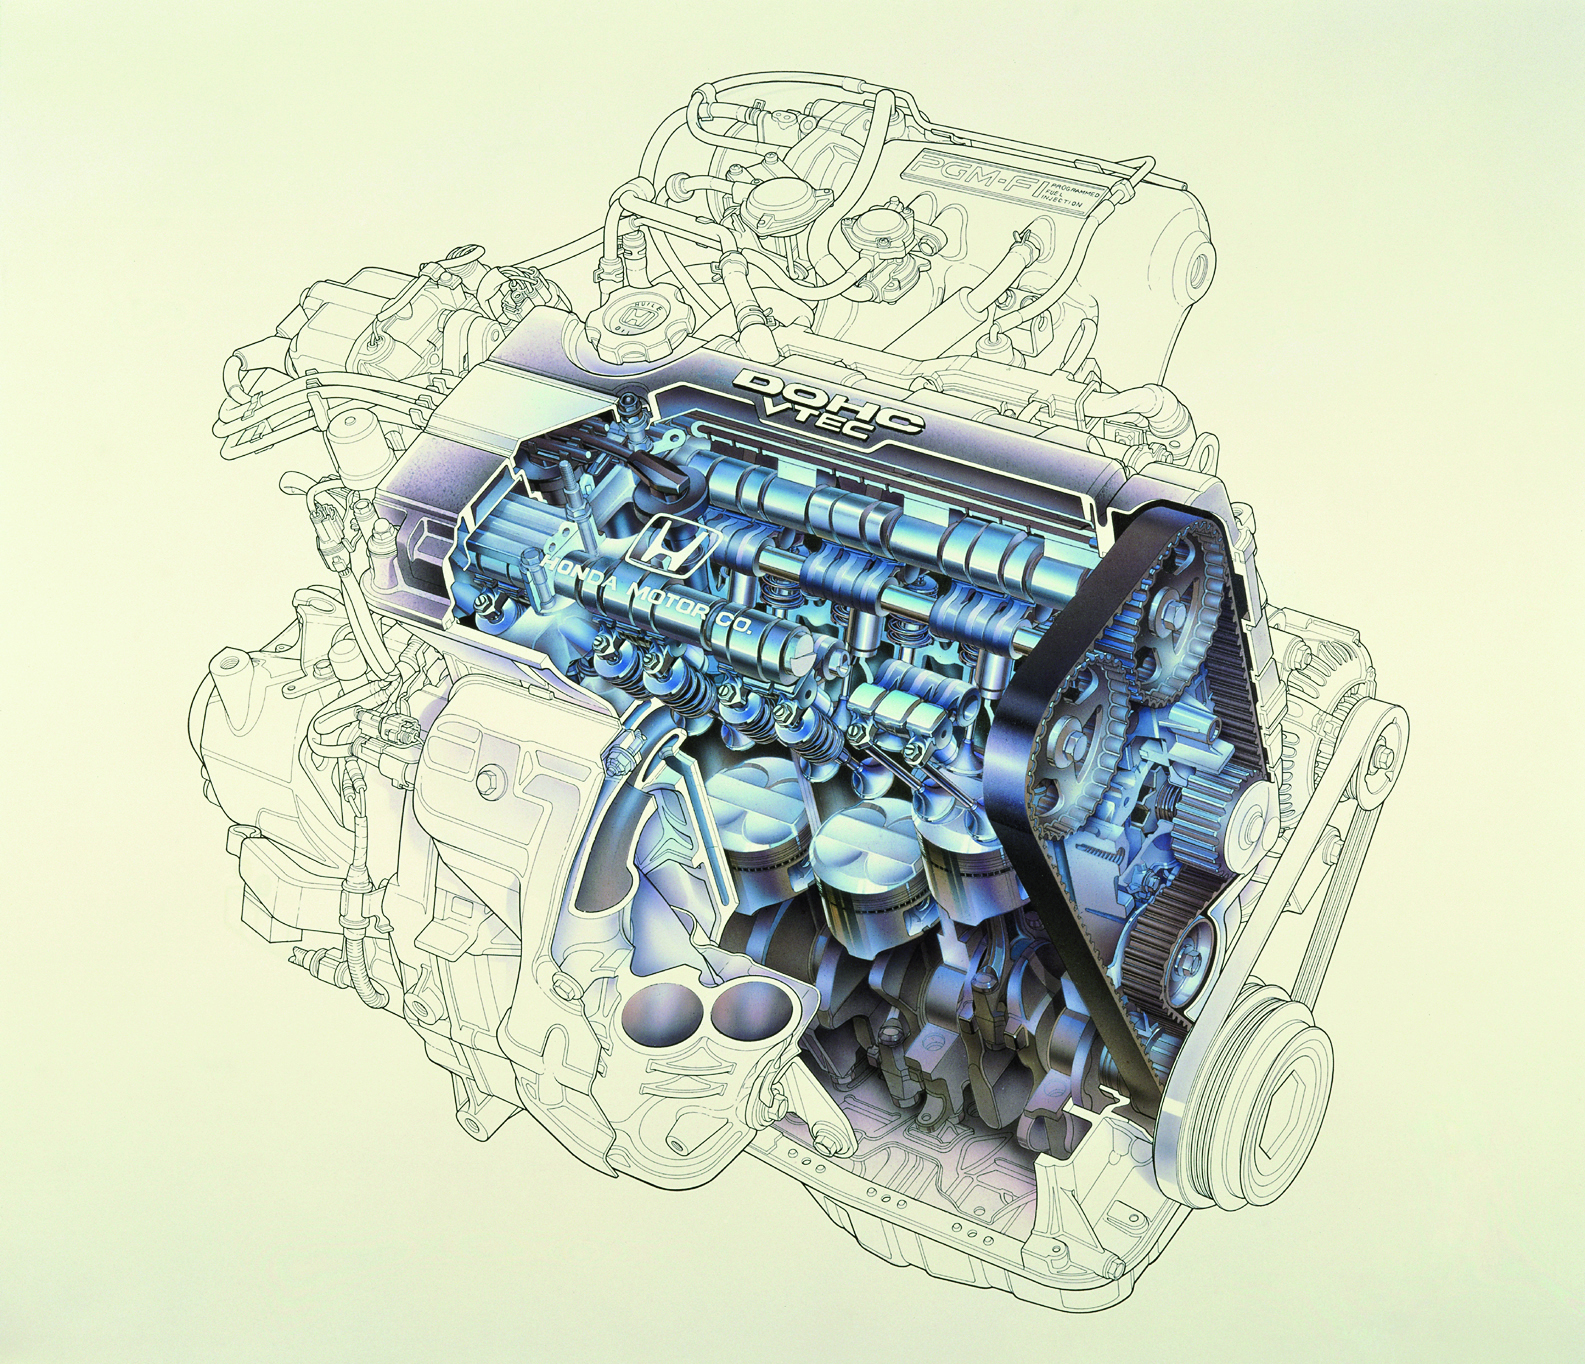 VTECは、バルブの開閉タイミングとリフト量をエンジンの回転数に応じて変化させ、吸排気量の調整を行なう可変バルブ機構のひとつ。初採用は1989年4月に搭載されたインテグラの1.6ℓエンジン